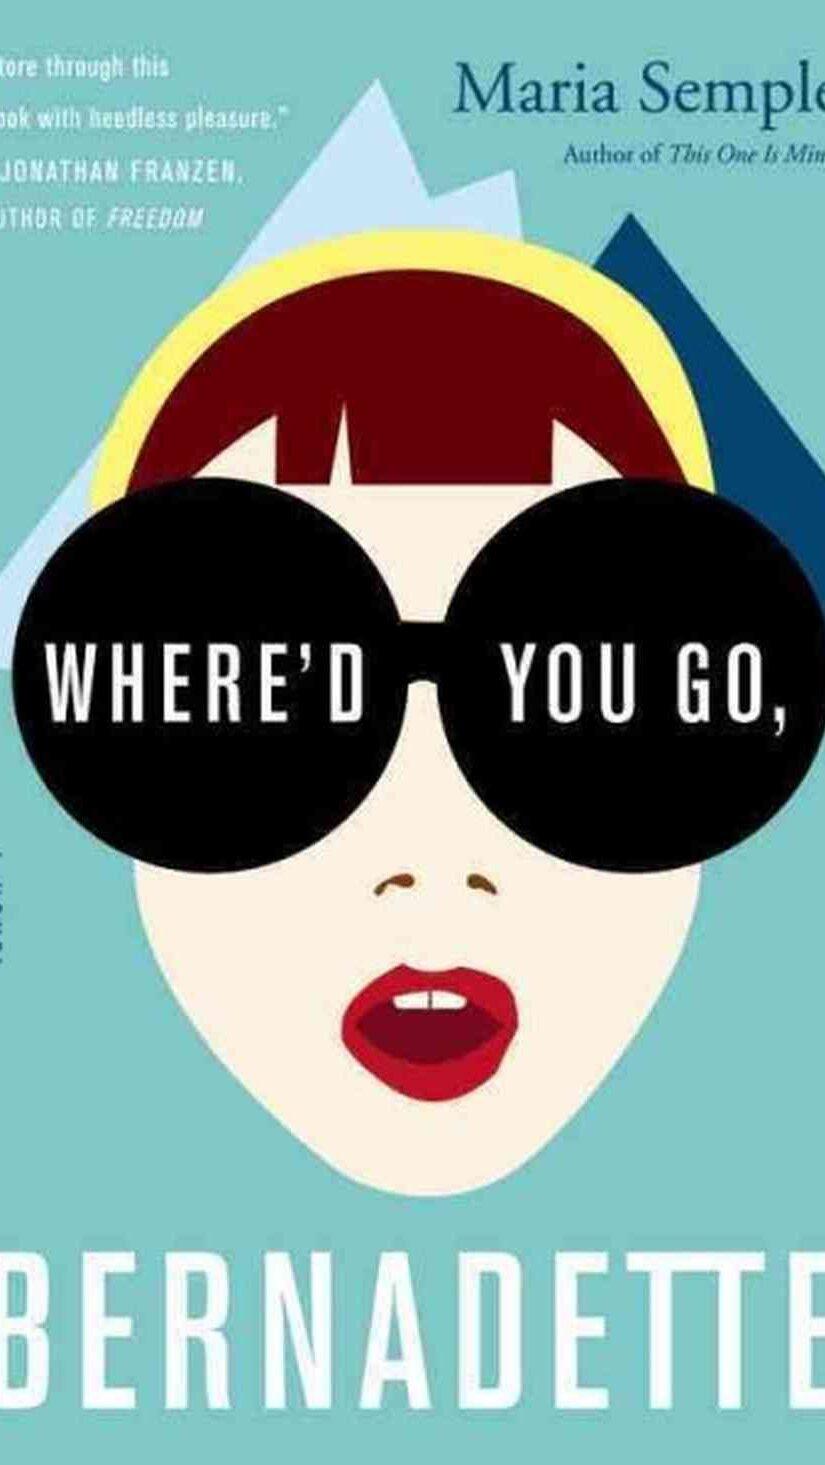 Where’d You Go, Bernadette by Maria Semple, dark humor